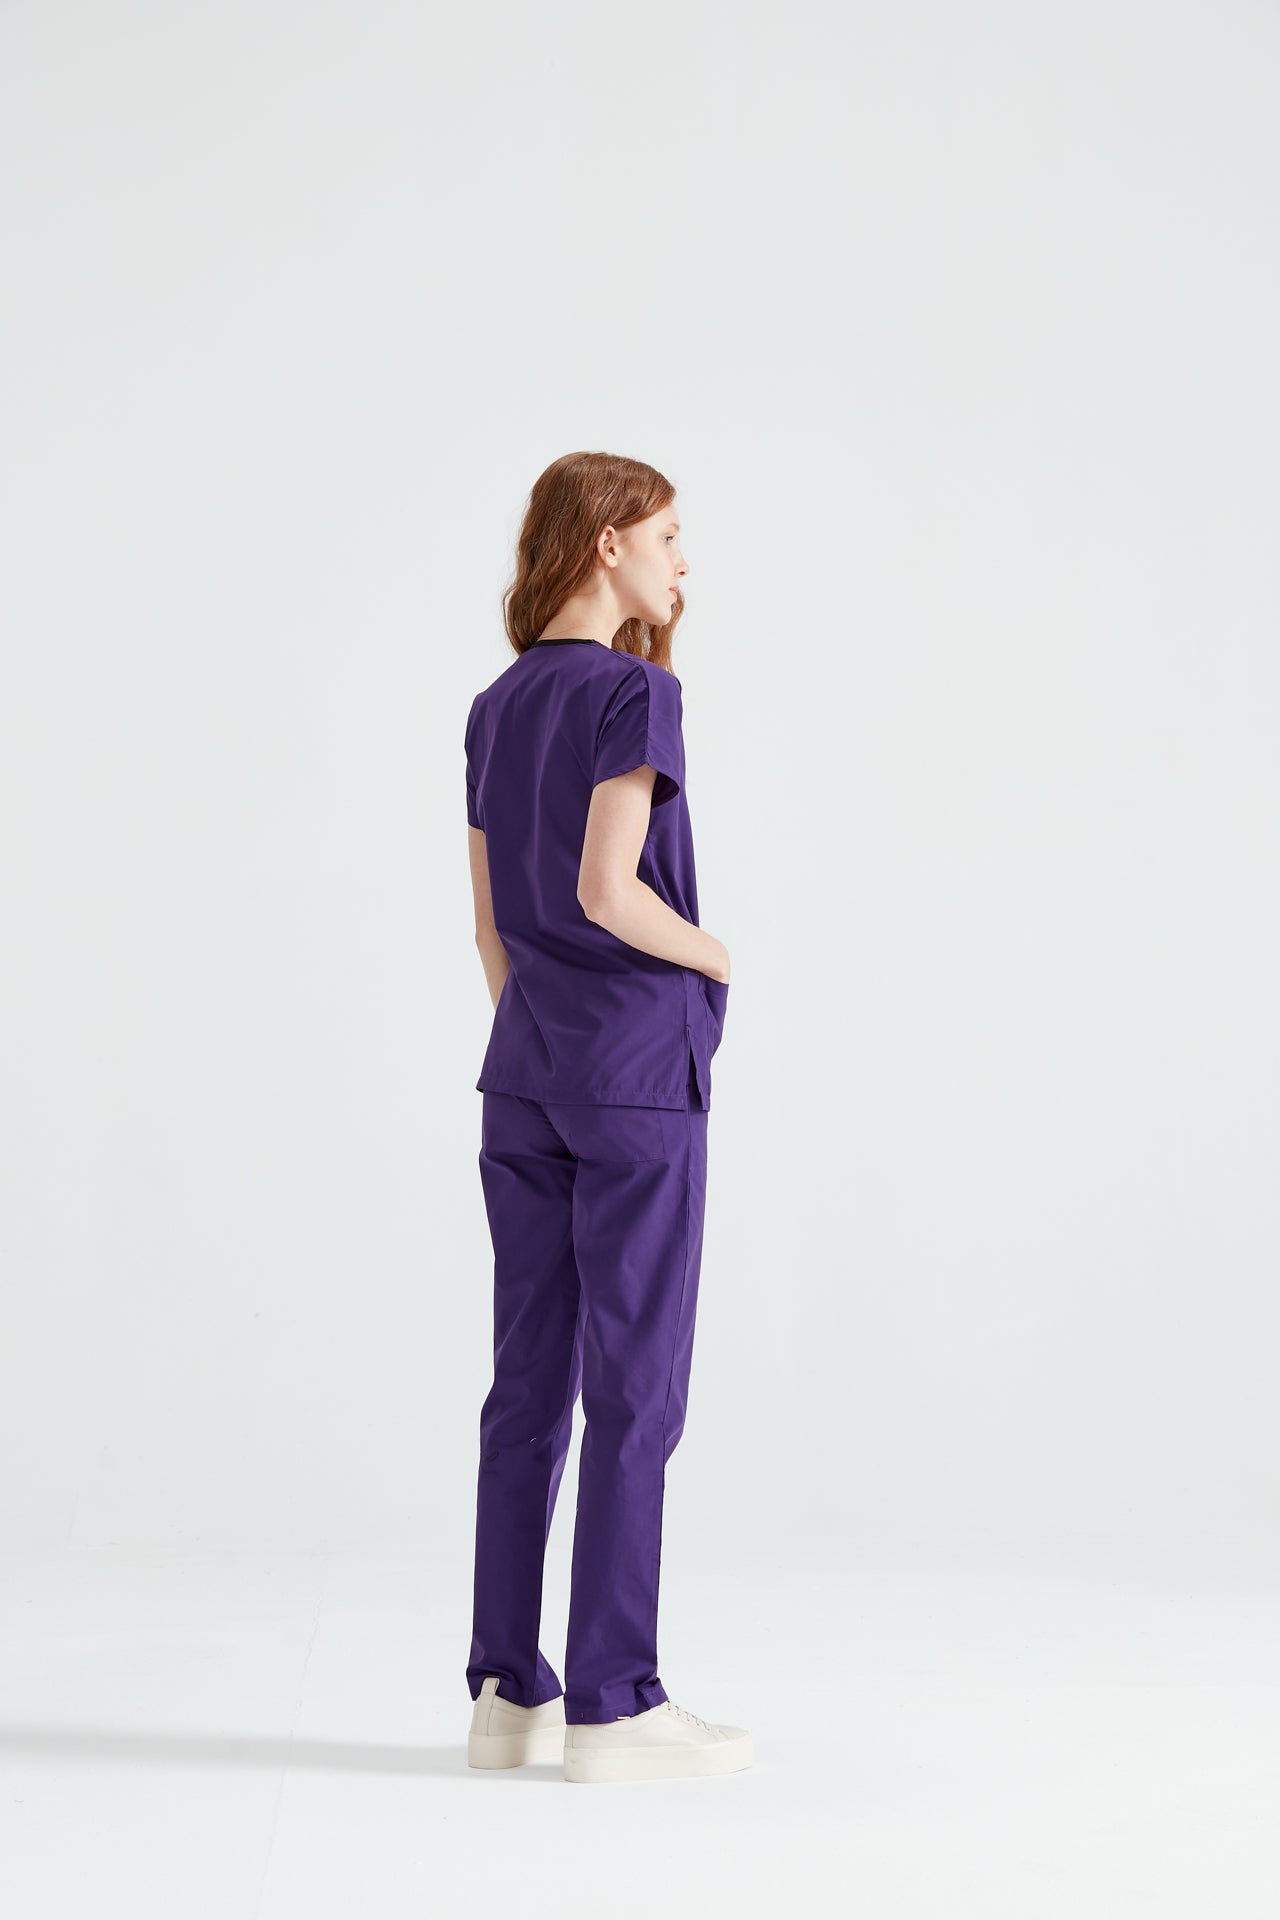  Asistenta medicala in costum medical mov Purple, vedere din spate